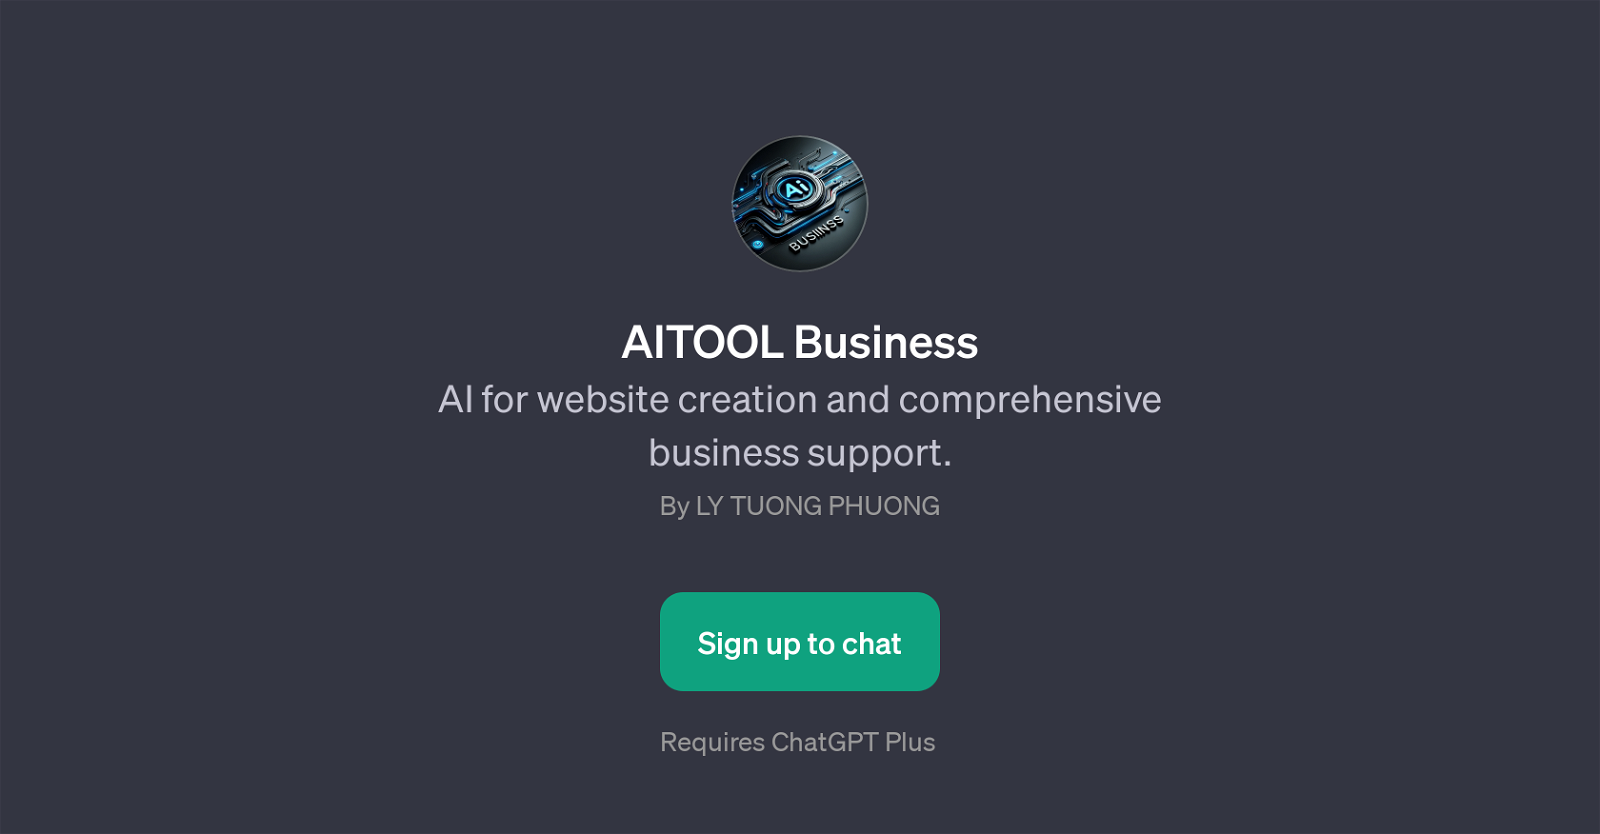 AITOOL Business website